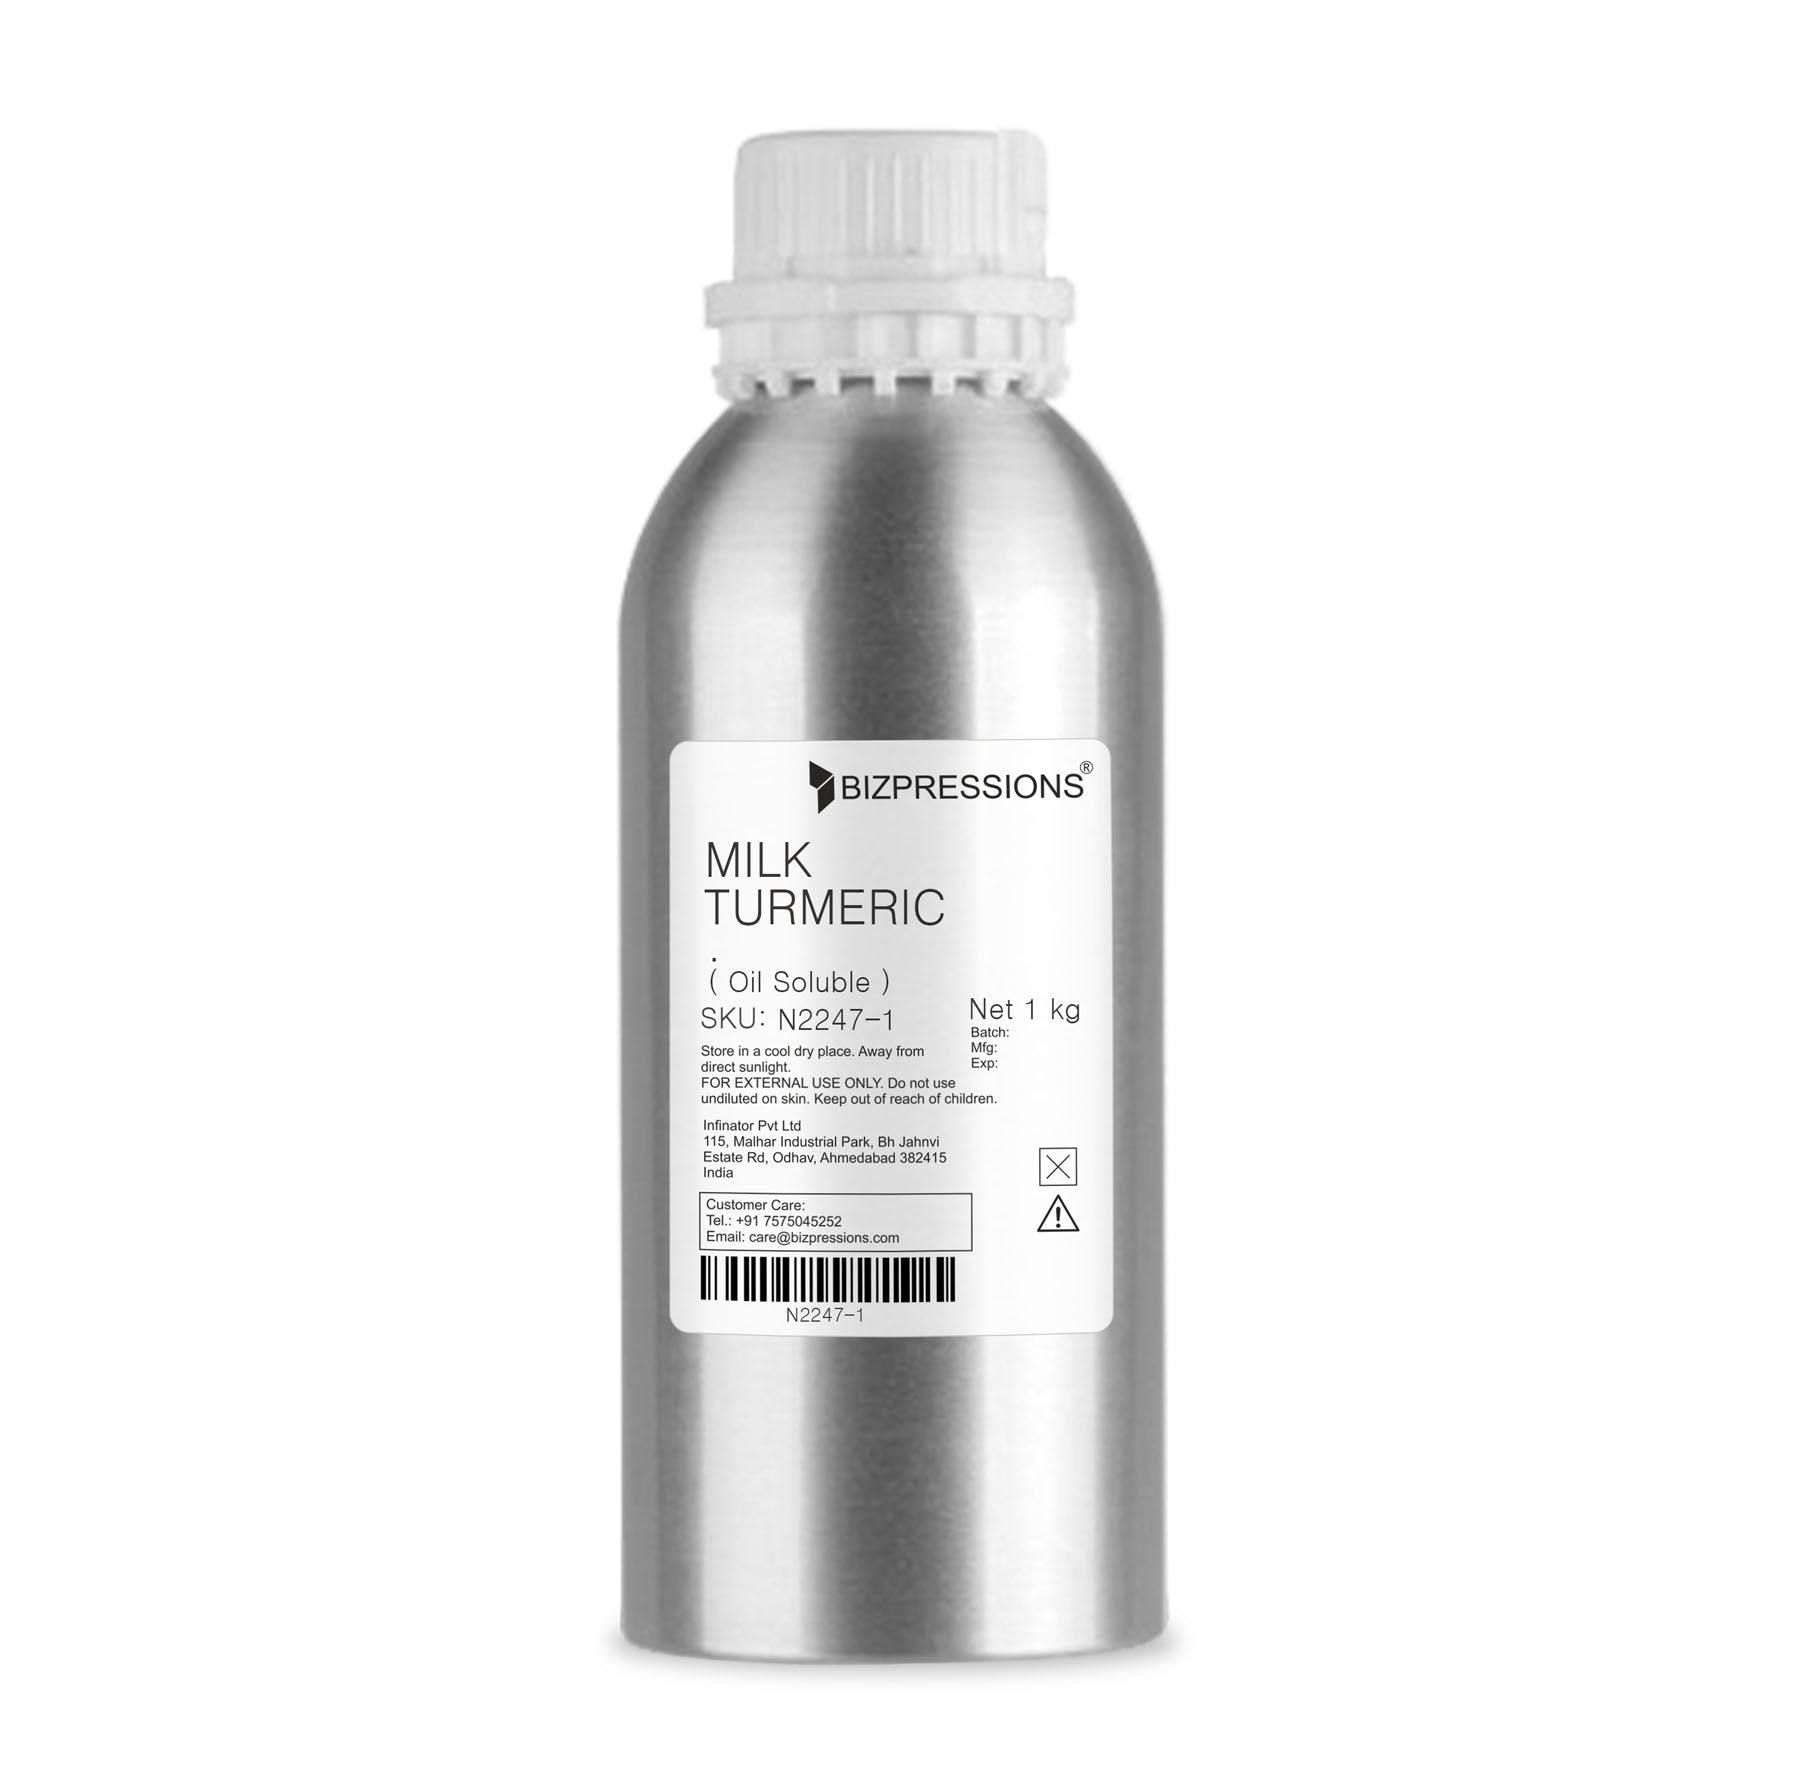 MILK TURMERIC - Fragrance ( Oil Soluble ) - 1 kg